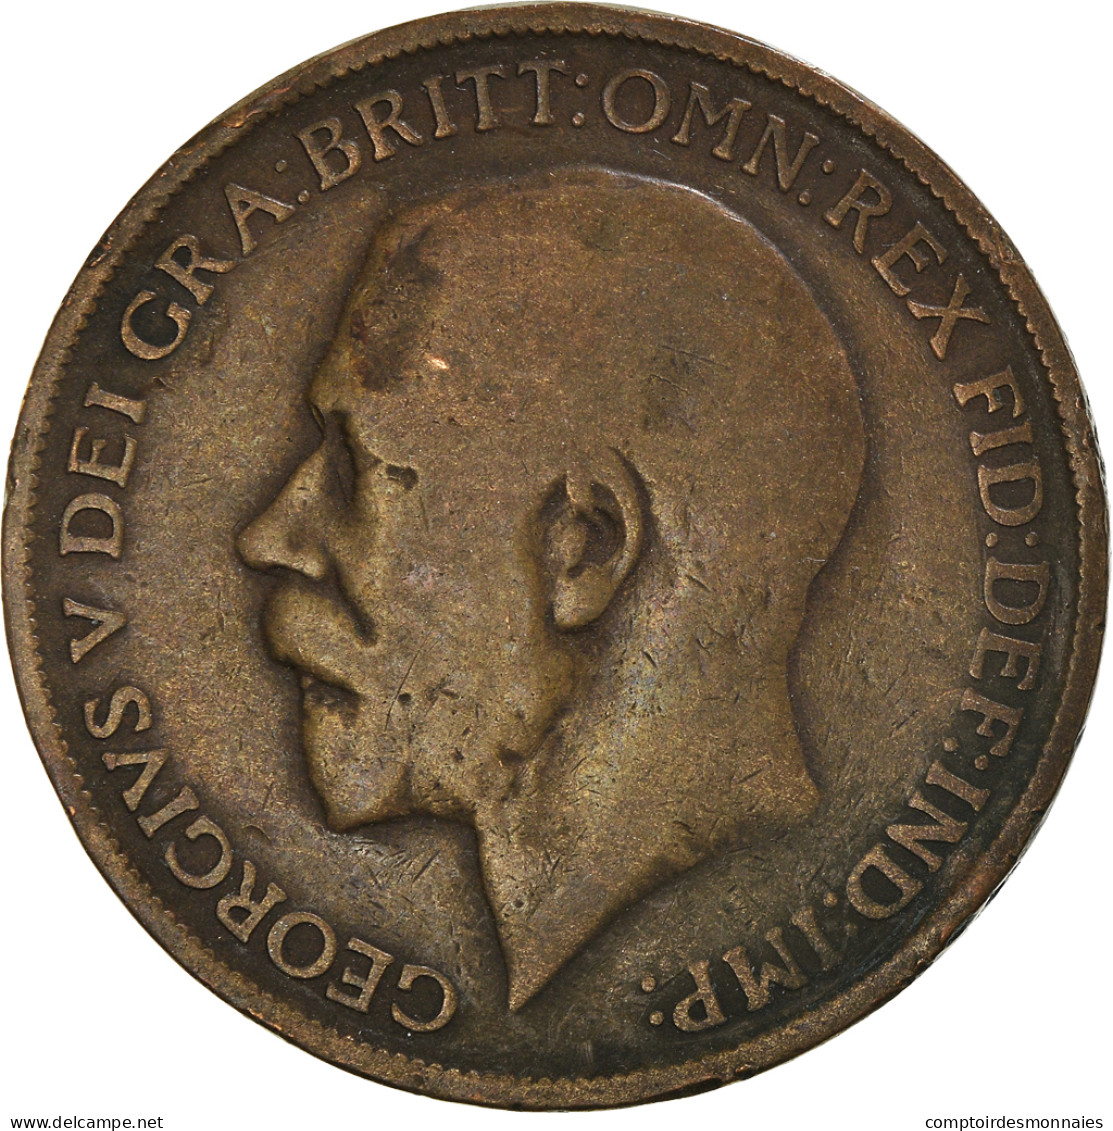 Monnaie, Grande-Bretagne, 1911 - D. 1 Penny